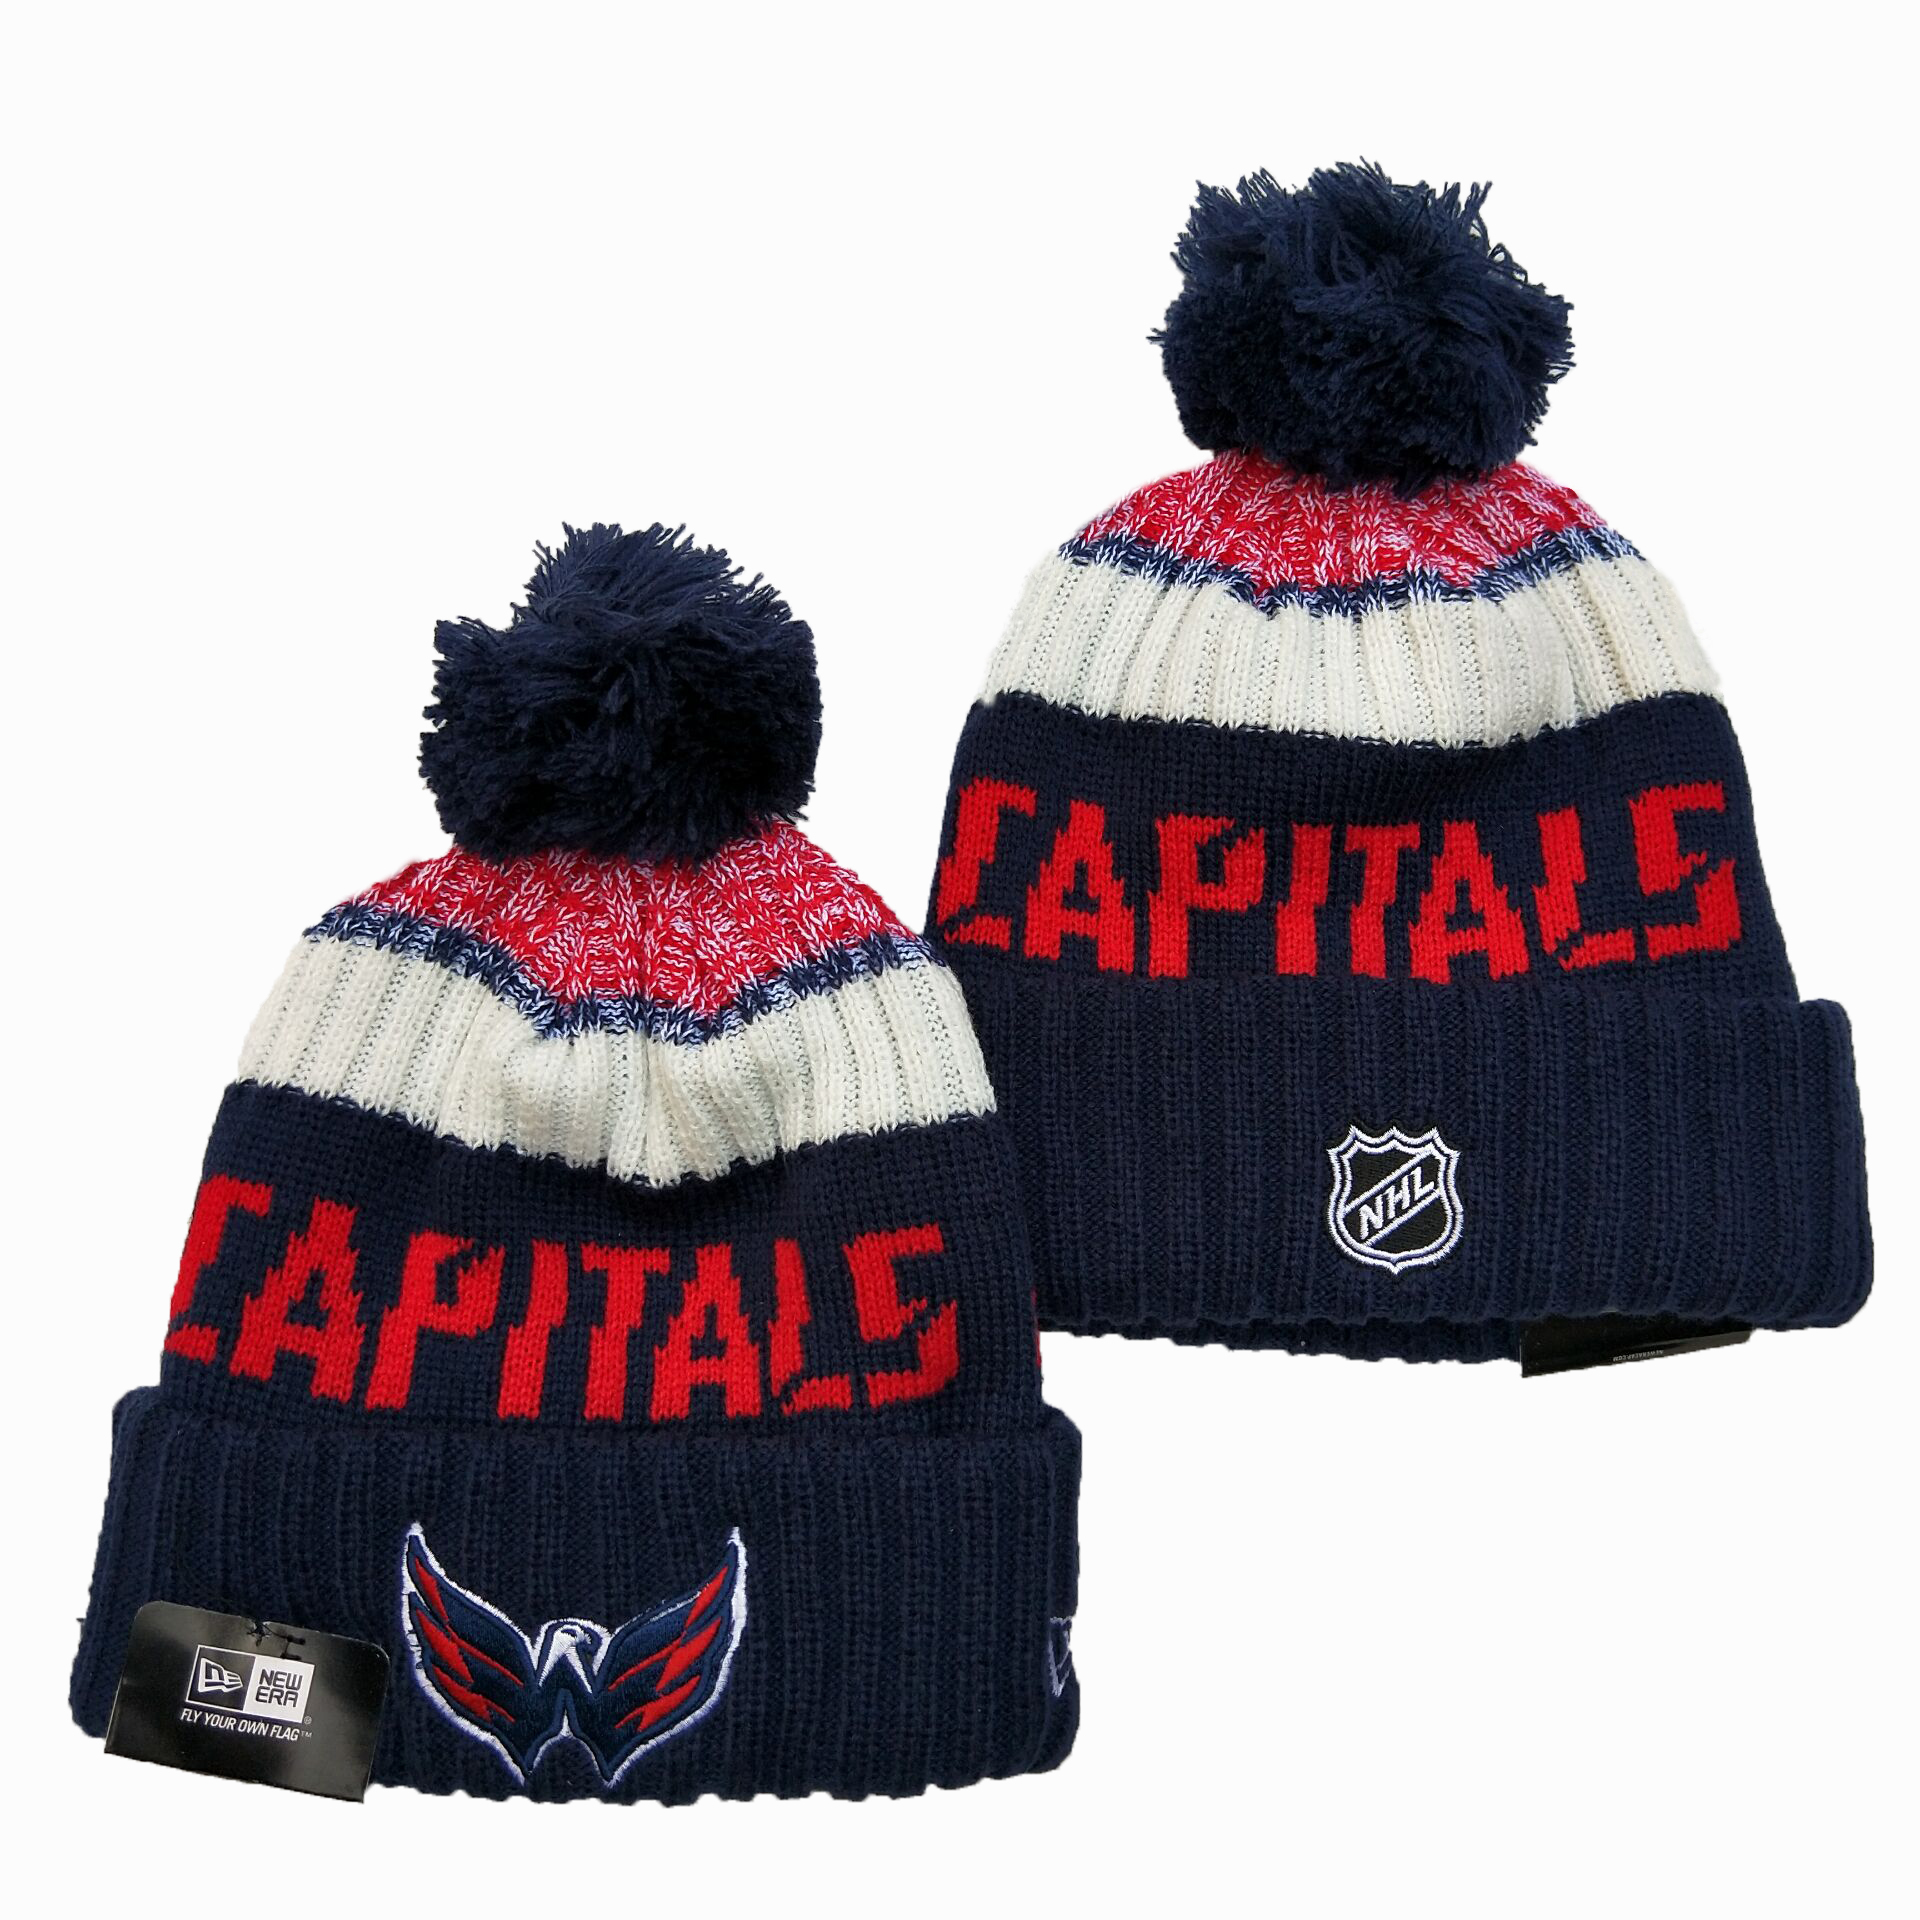 Washington Capitals Knit Hats 002